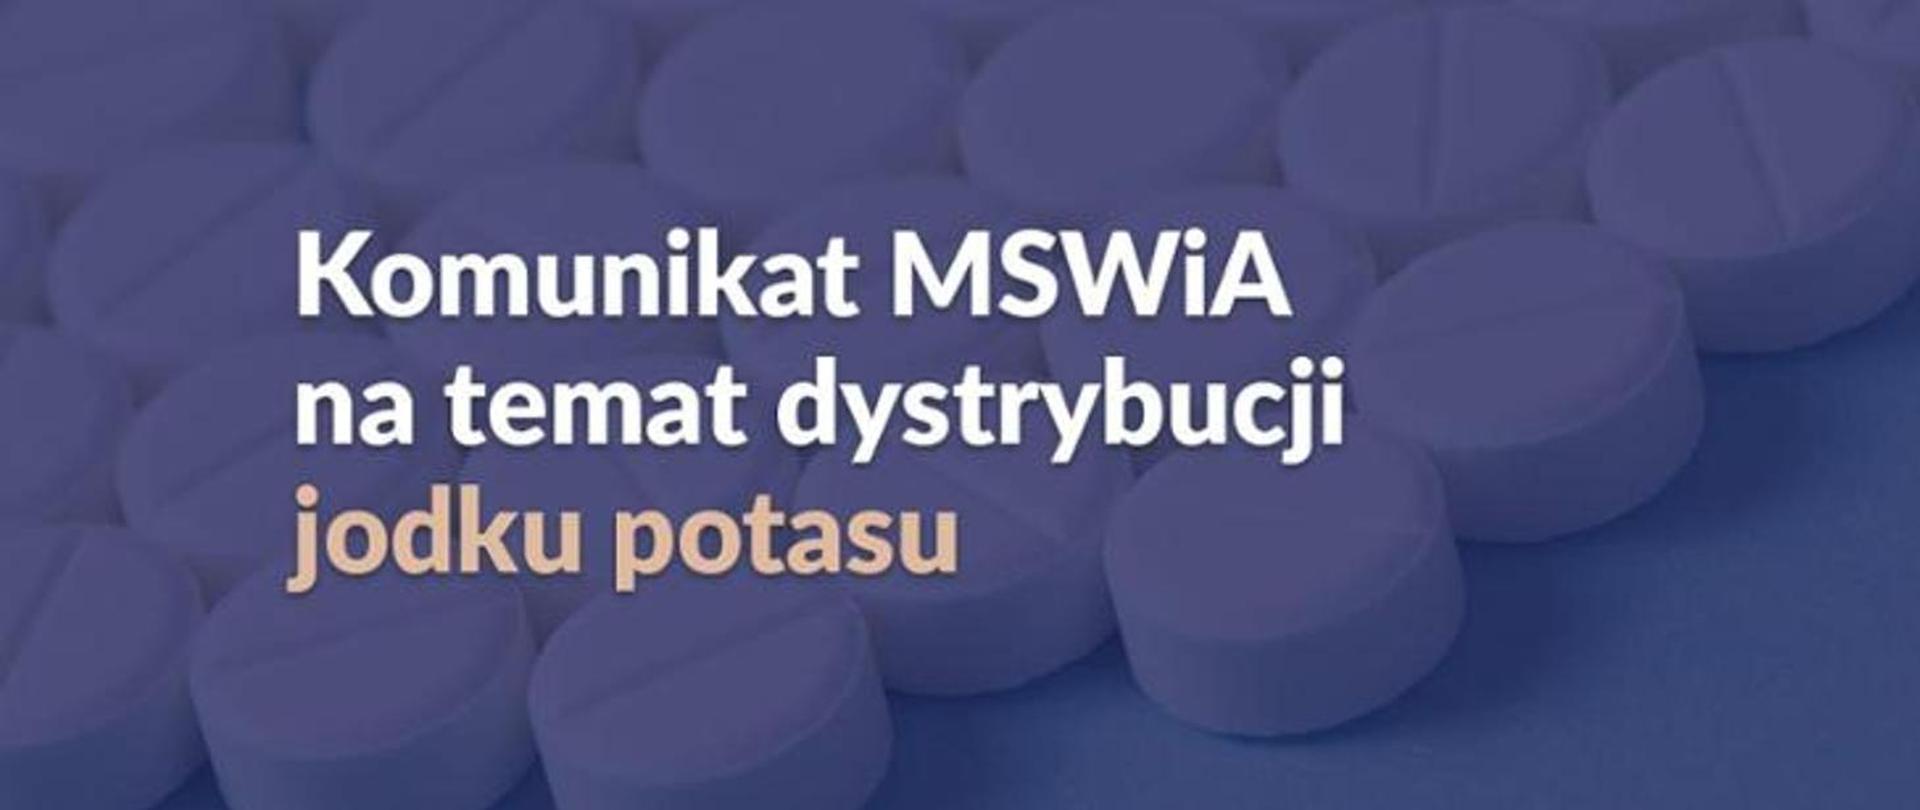 Plakat, Komunikat MSWiA na temat dystrybucji jodku potasu